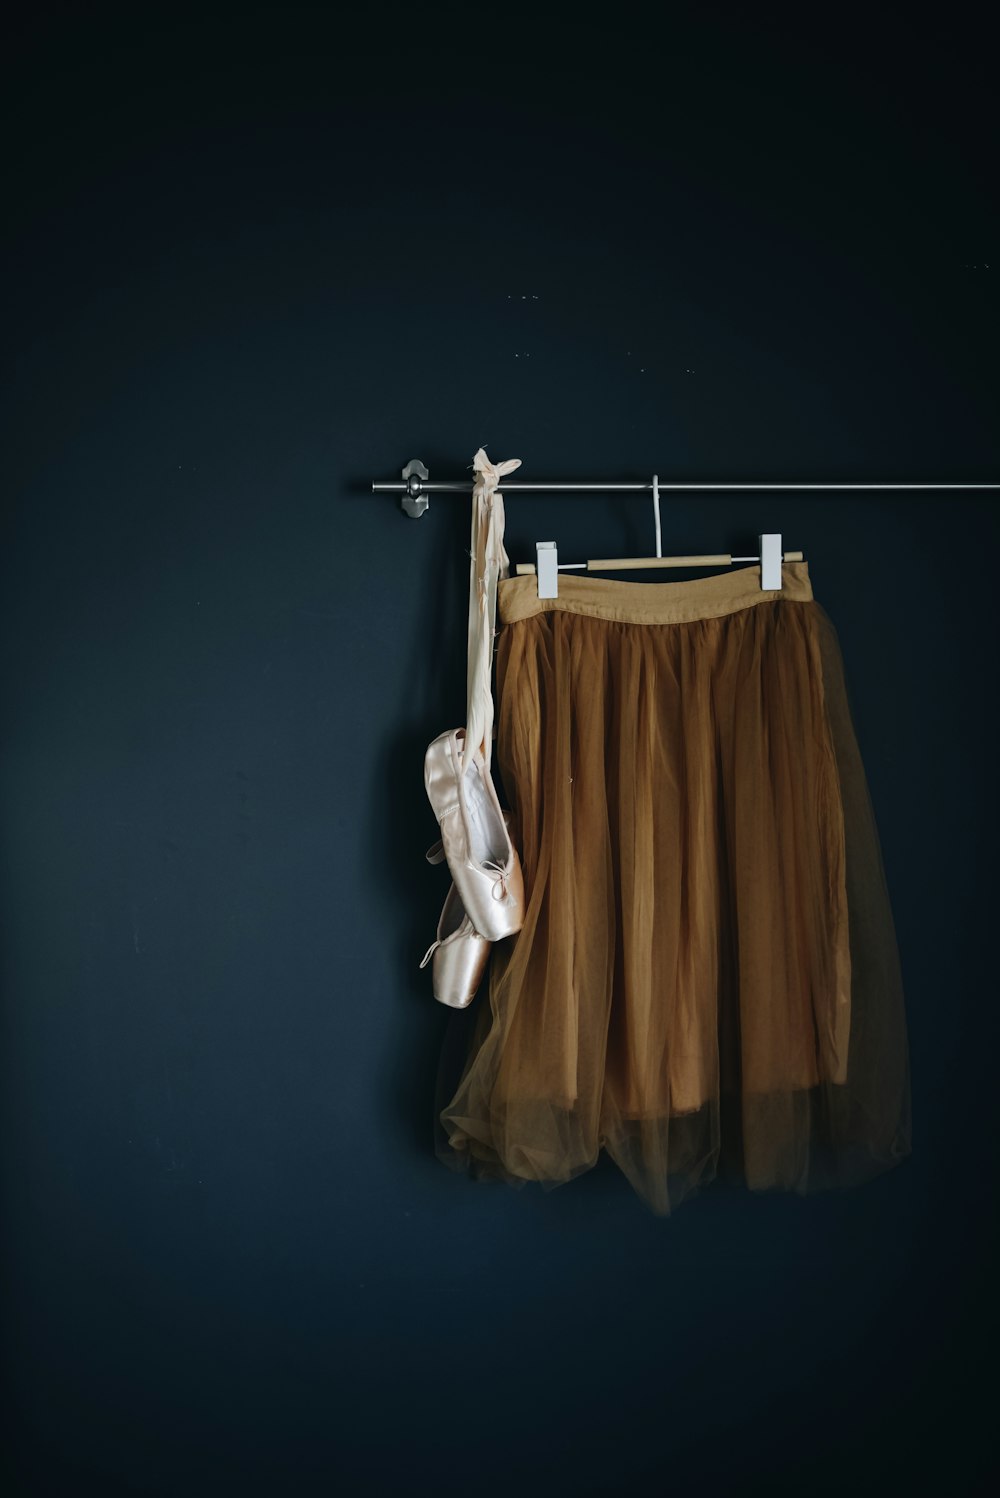 brown skirt hanged on wall